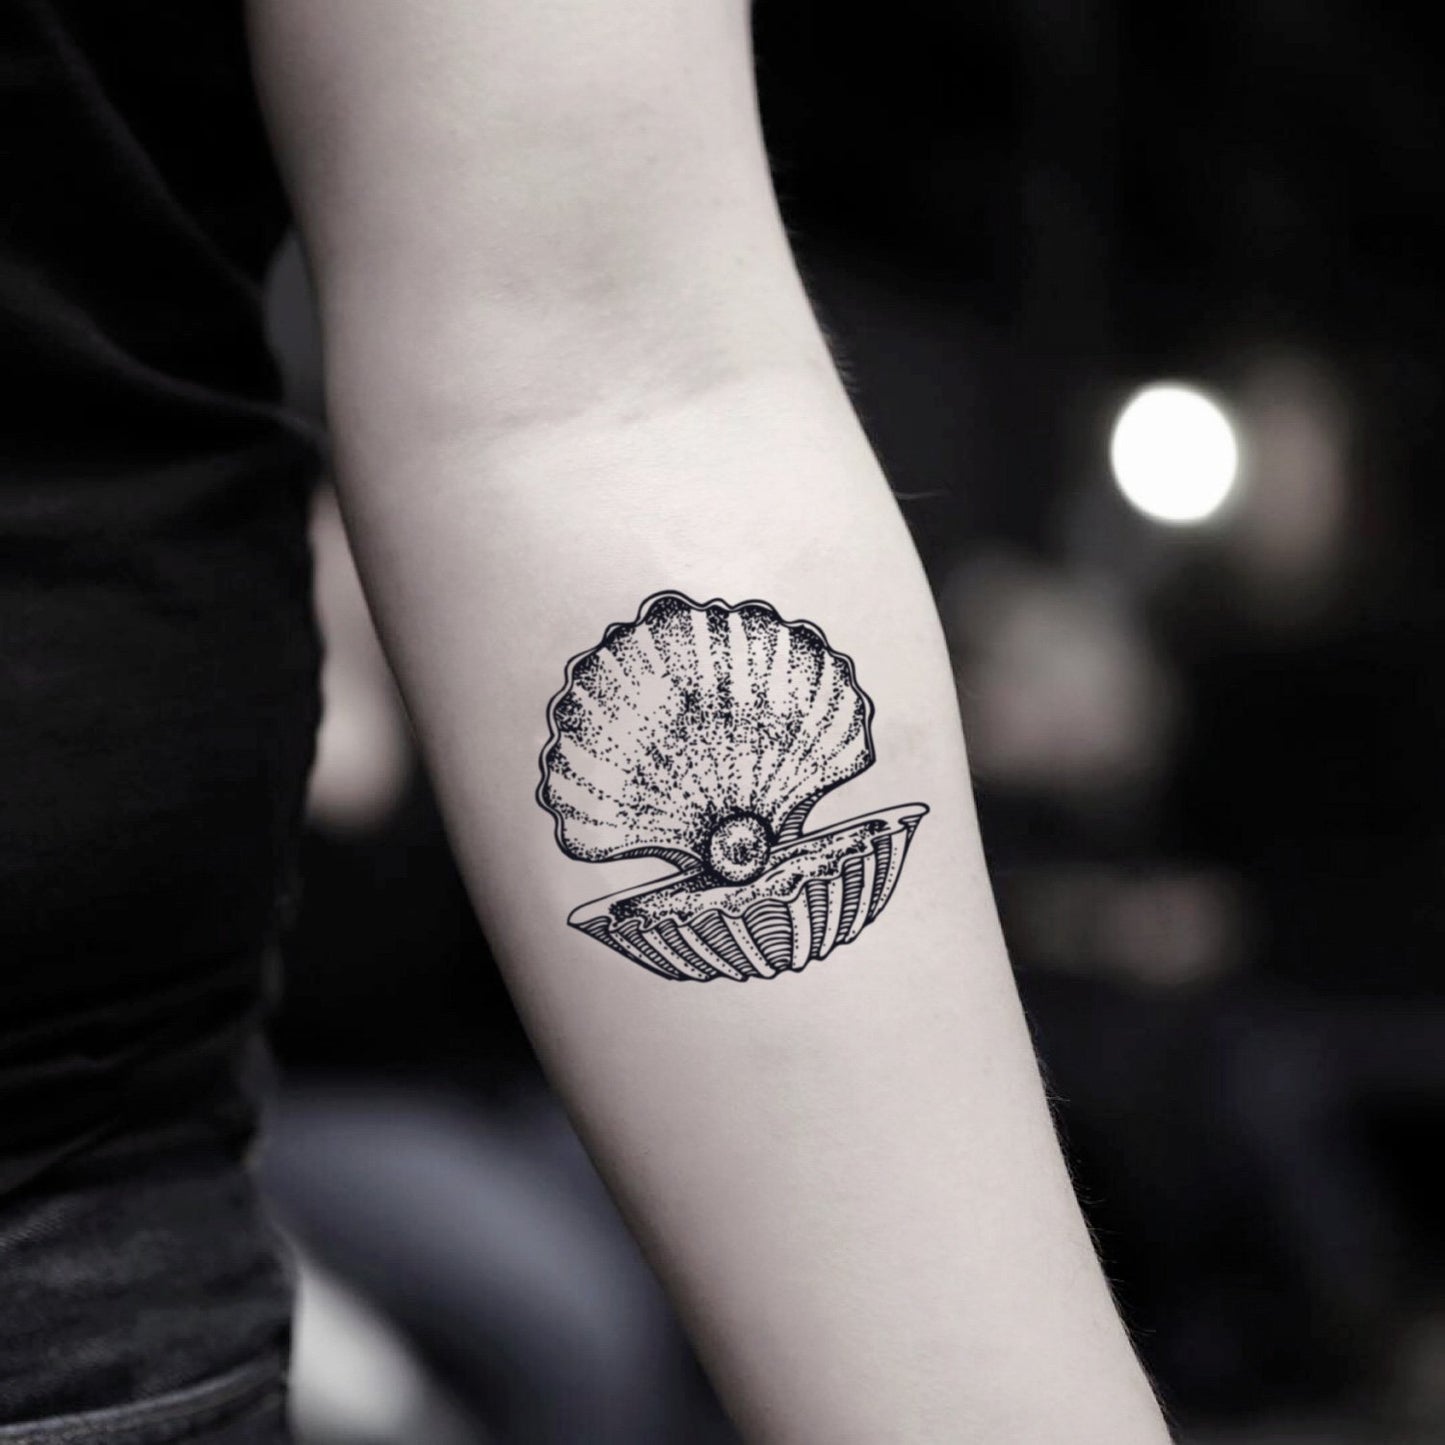 fake small pearl clam illustrative temporary tattoo sticker design idea on inner arm